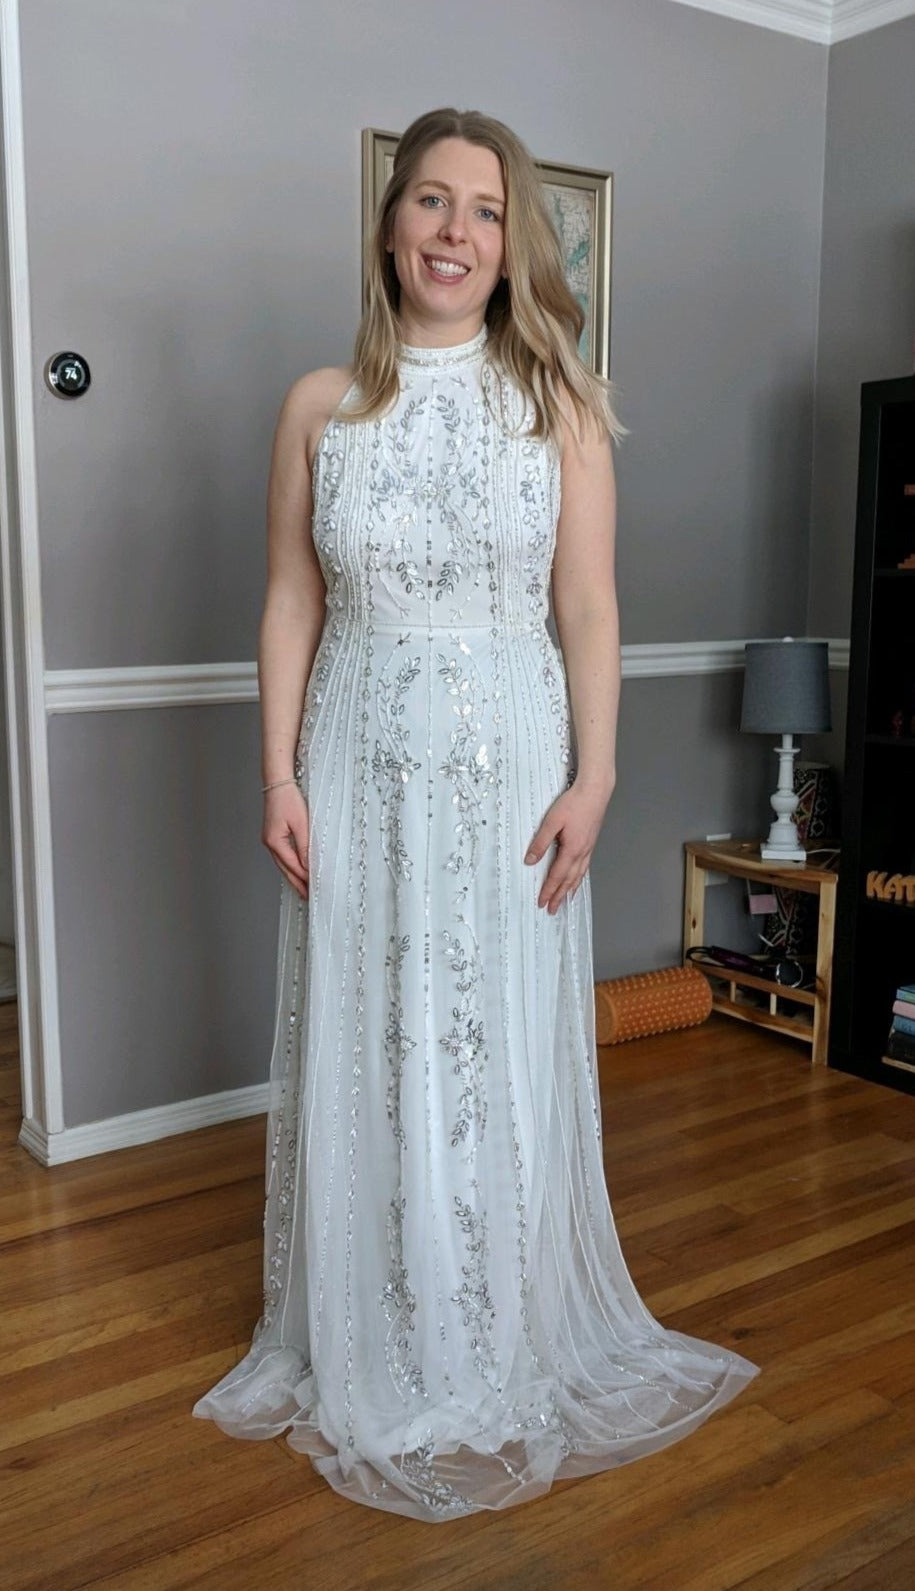 BHLDN 'Osborne' wedding dress size-04 NEW